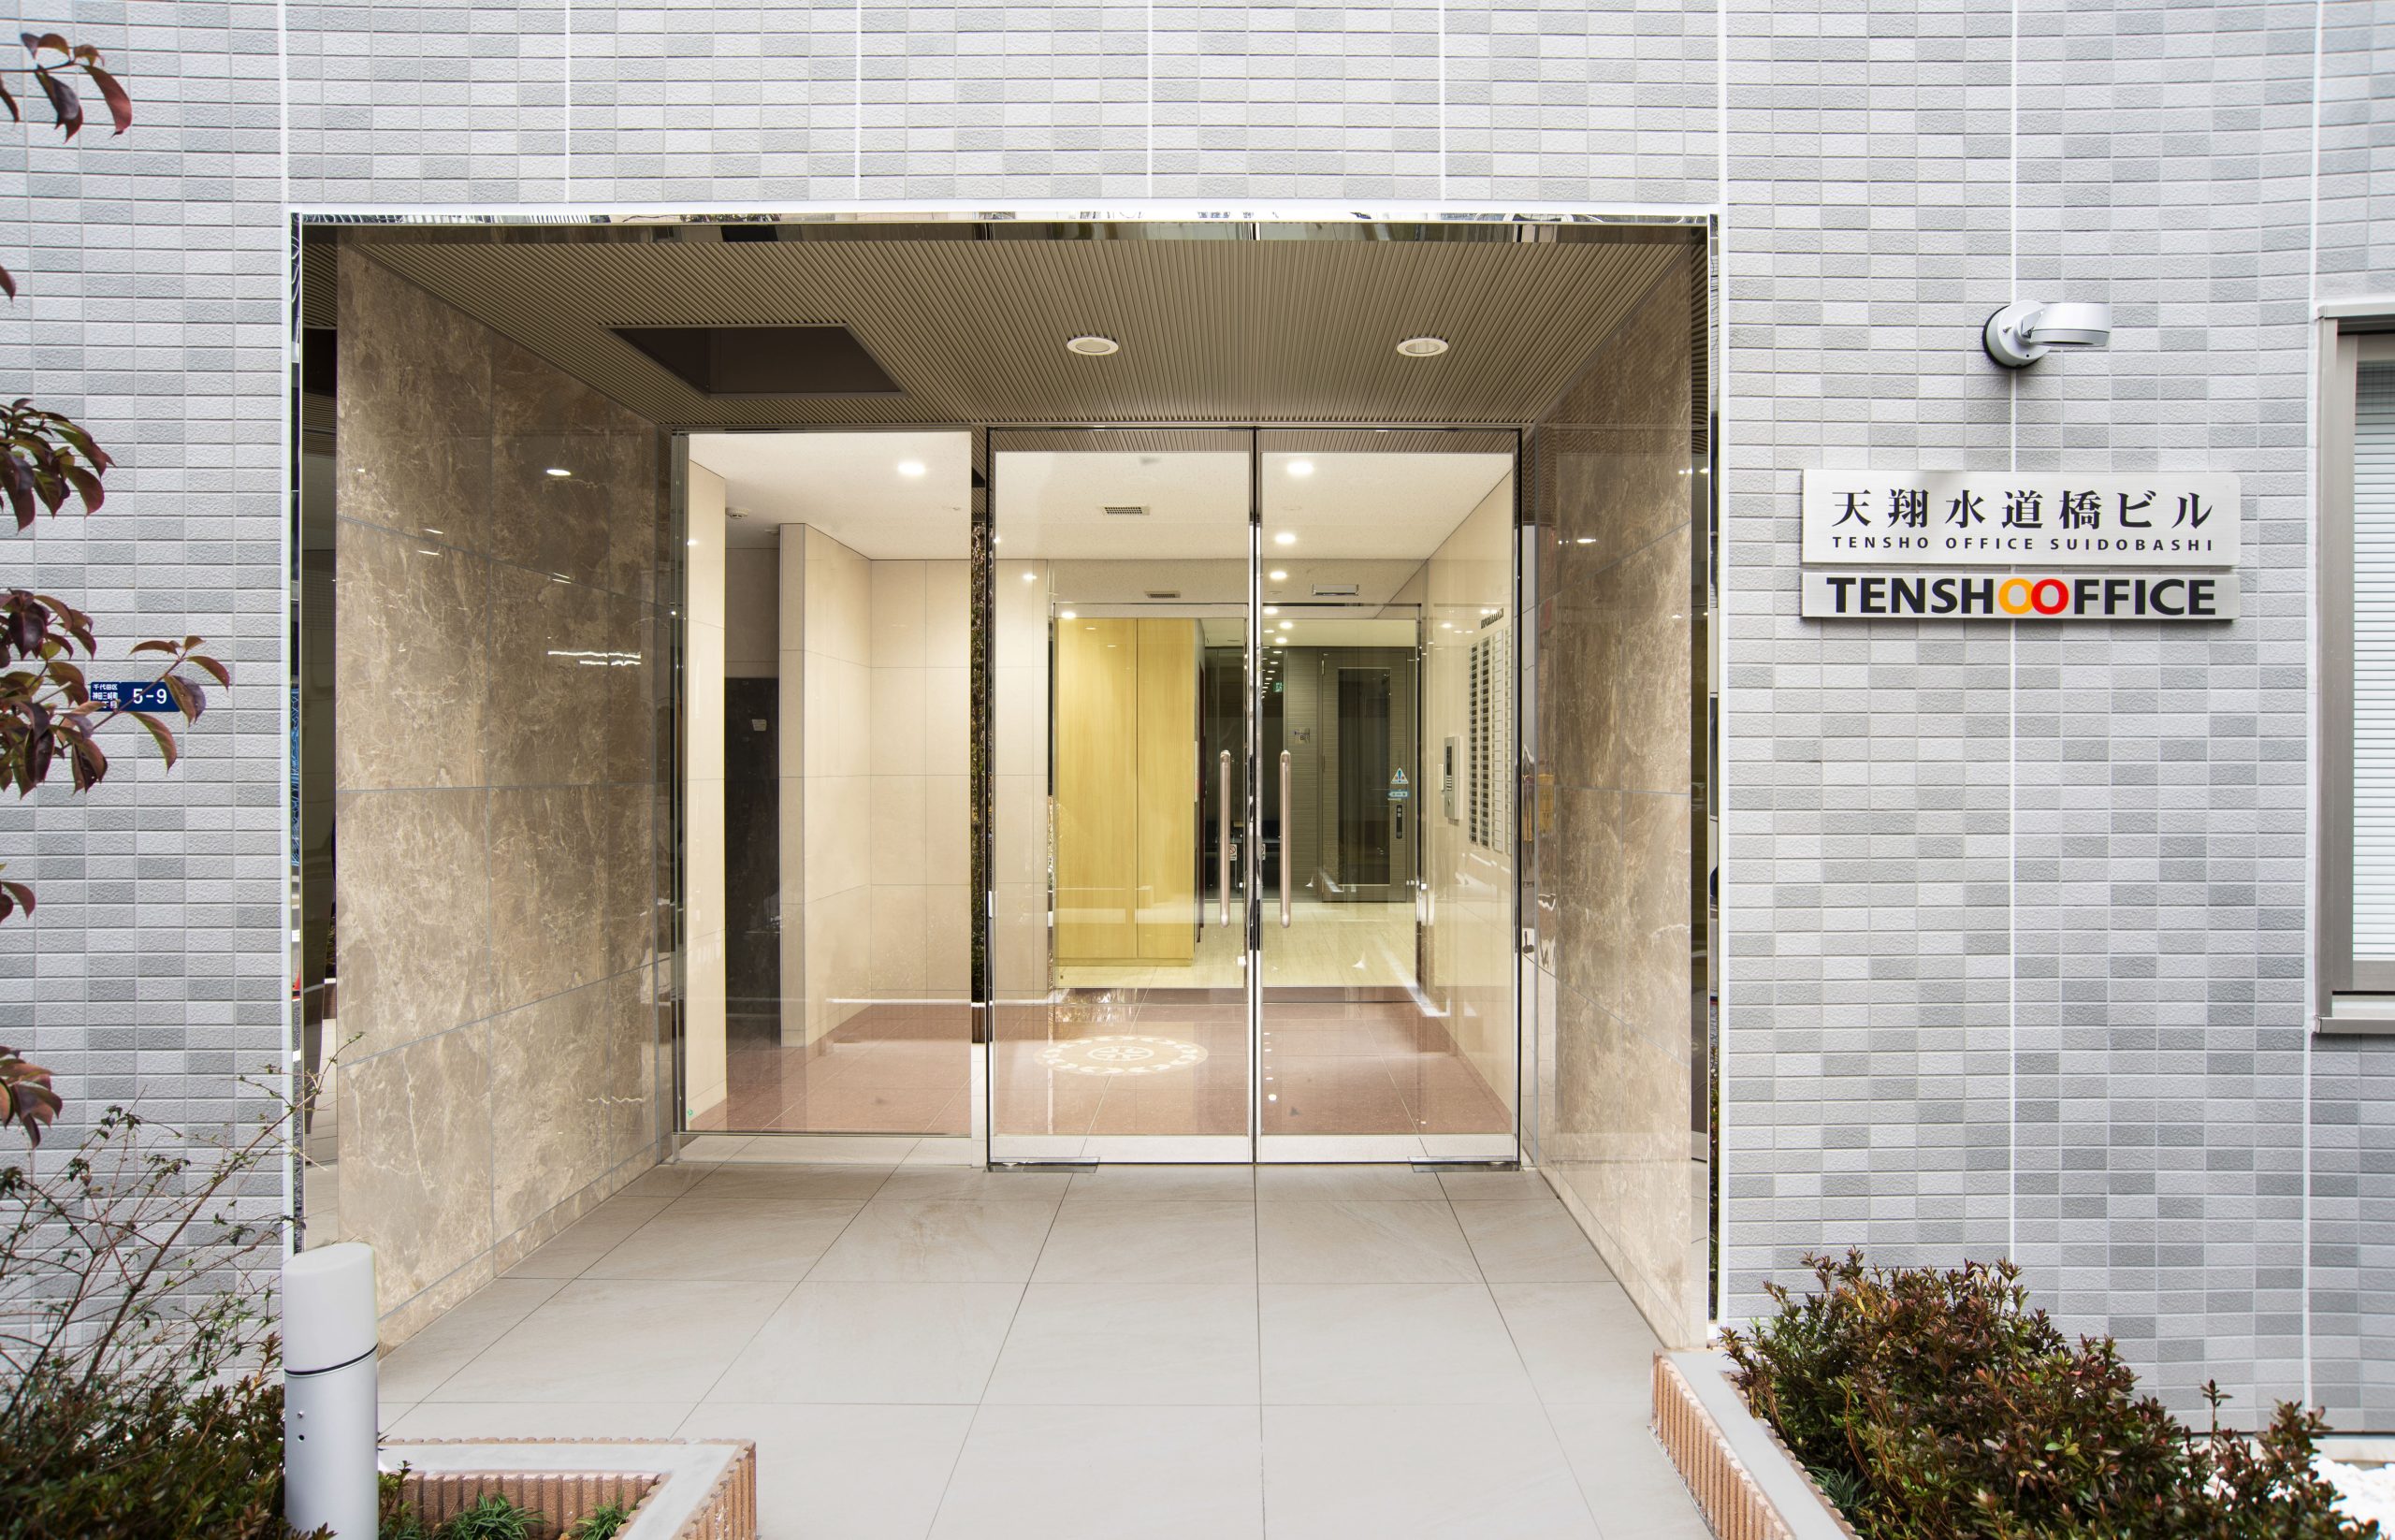 Entrance - TENSHO OFFICE Suidobashi